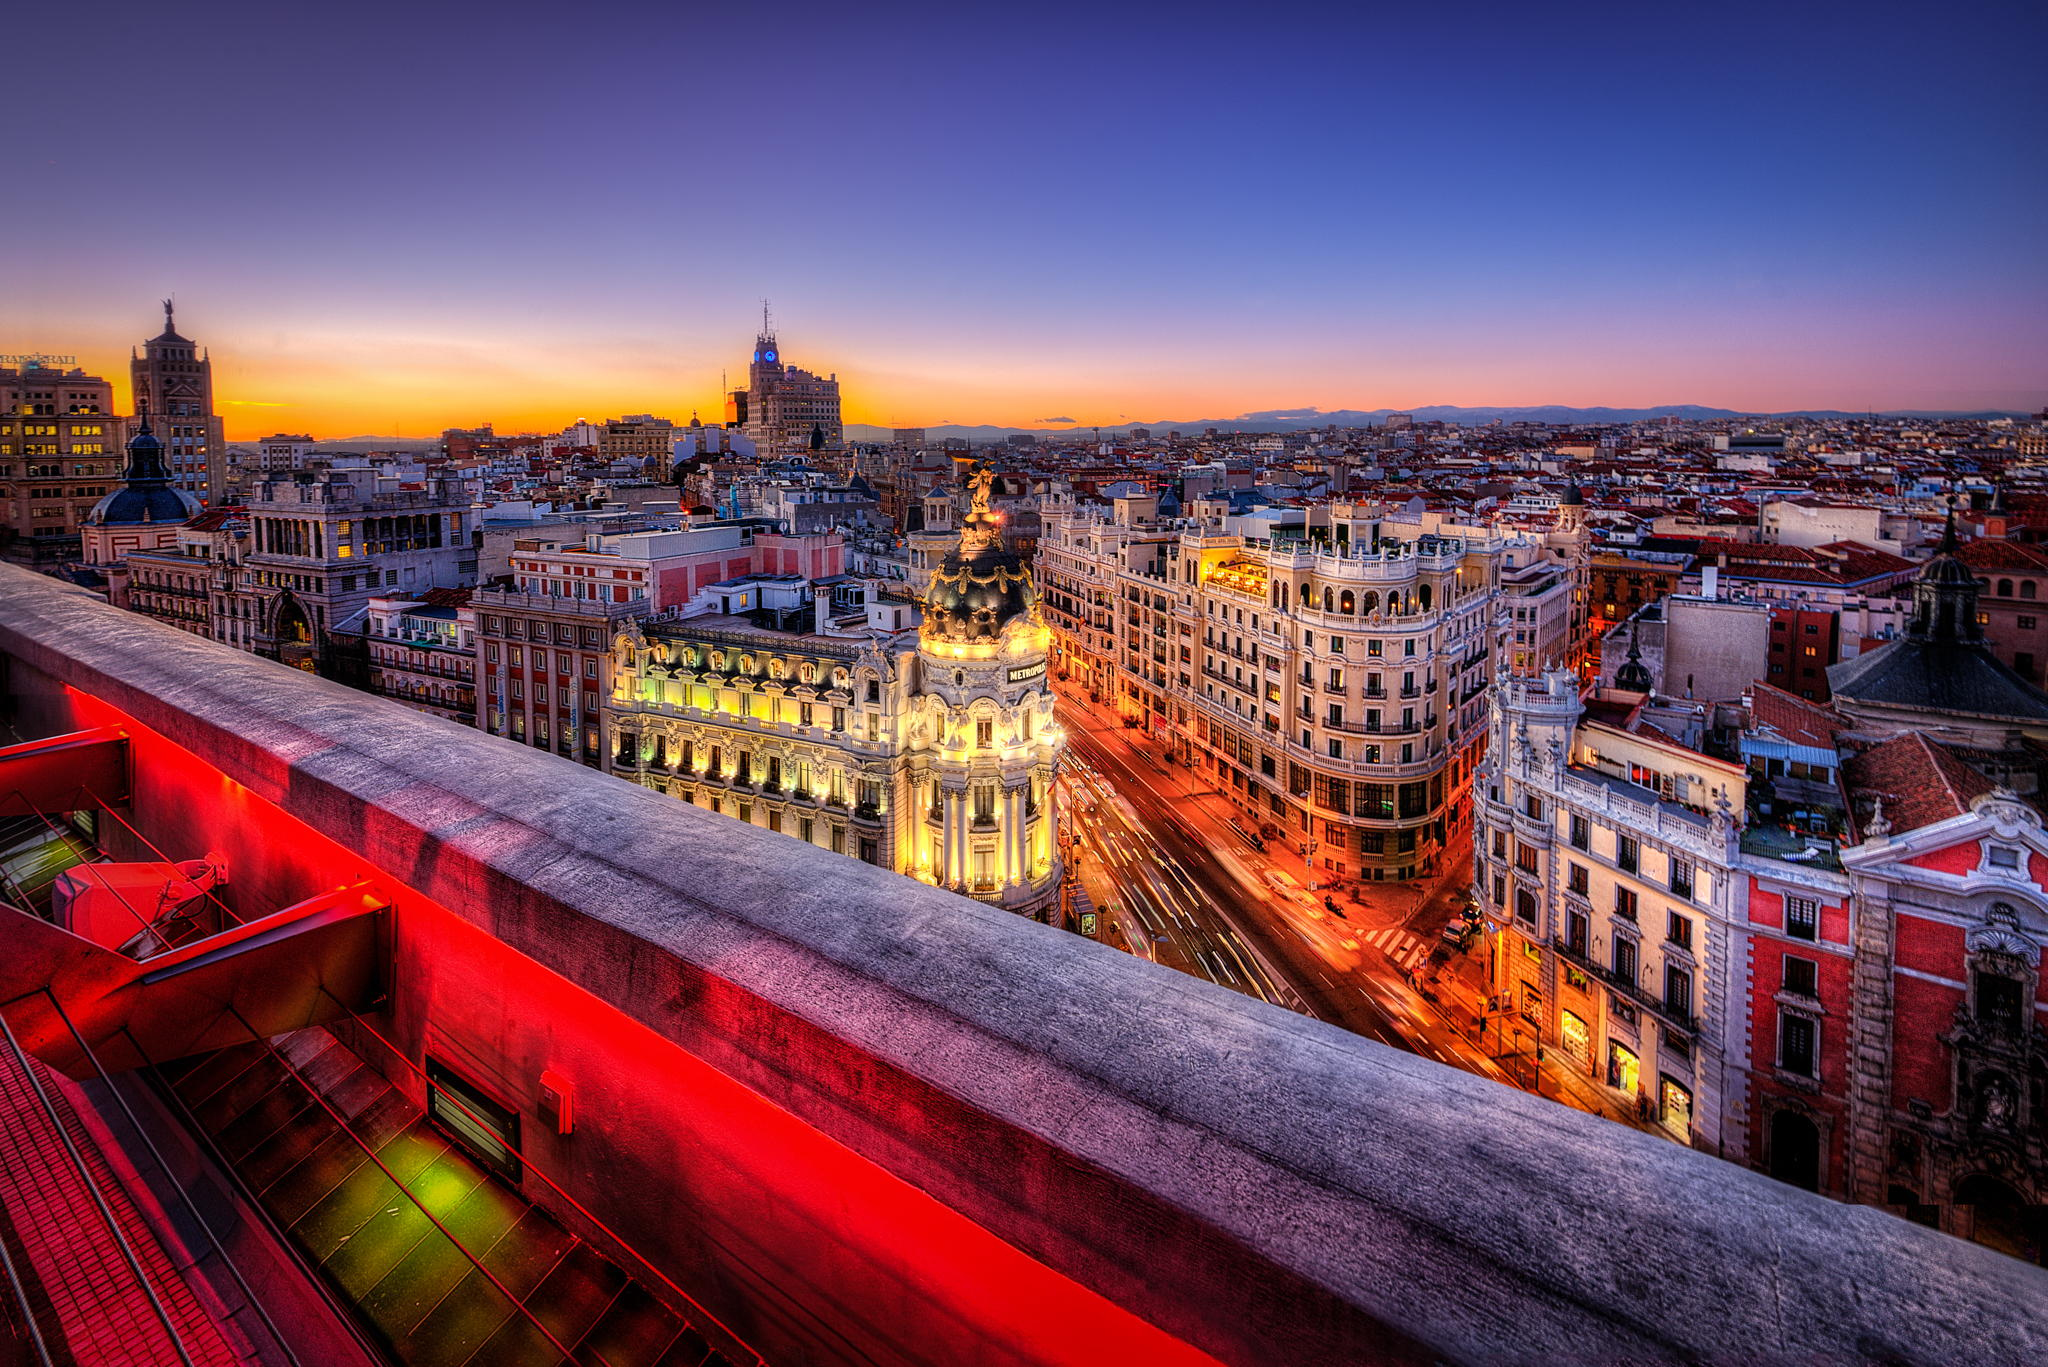 Sunset in Madrid by Gen Vagula